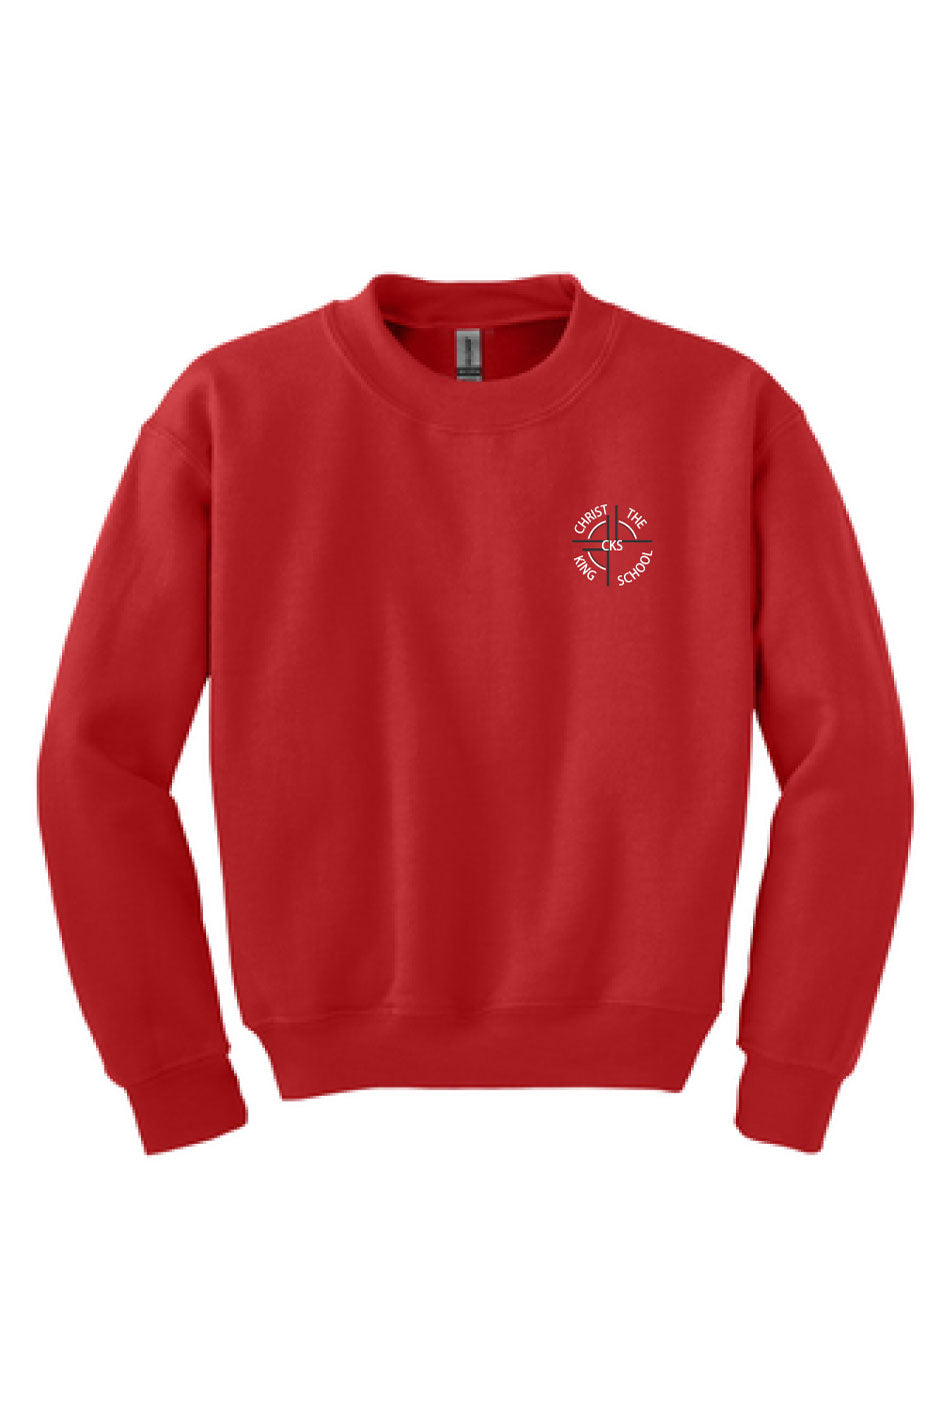 YOUTH CKS Crewneck Sweatshirt - Red*